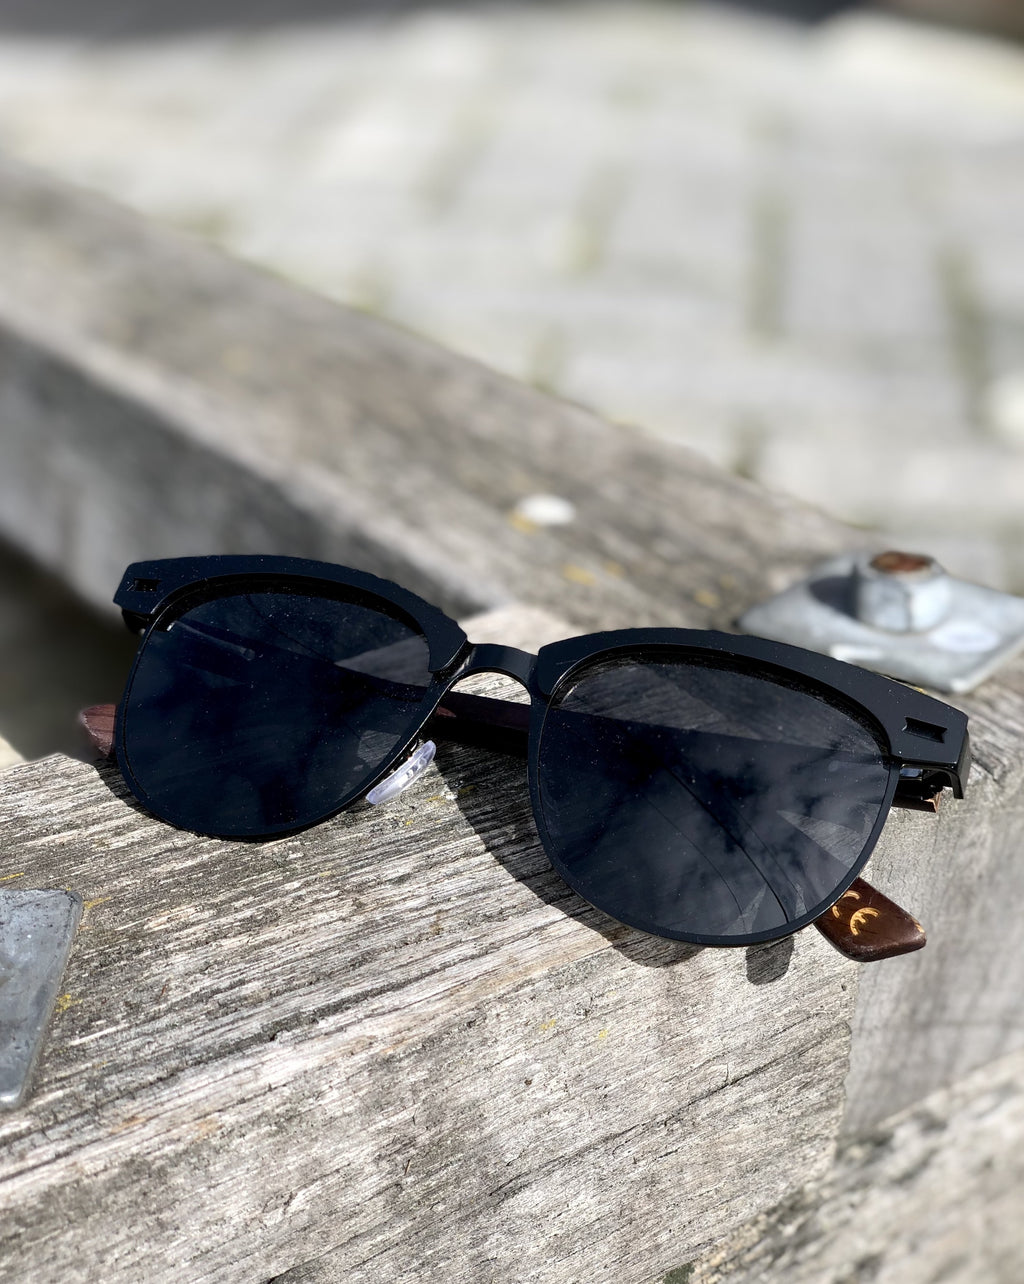 Electric Pukeko Sunglasses - Black Frames with Grey Polarised Lenses & Dark Wood Arms